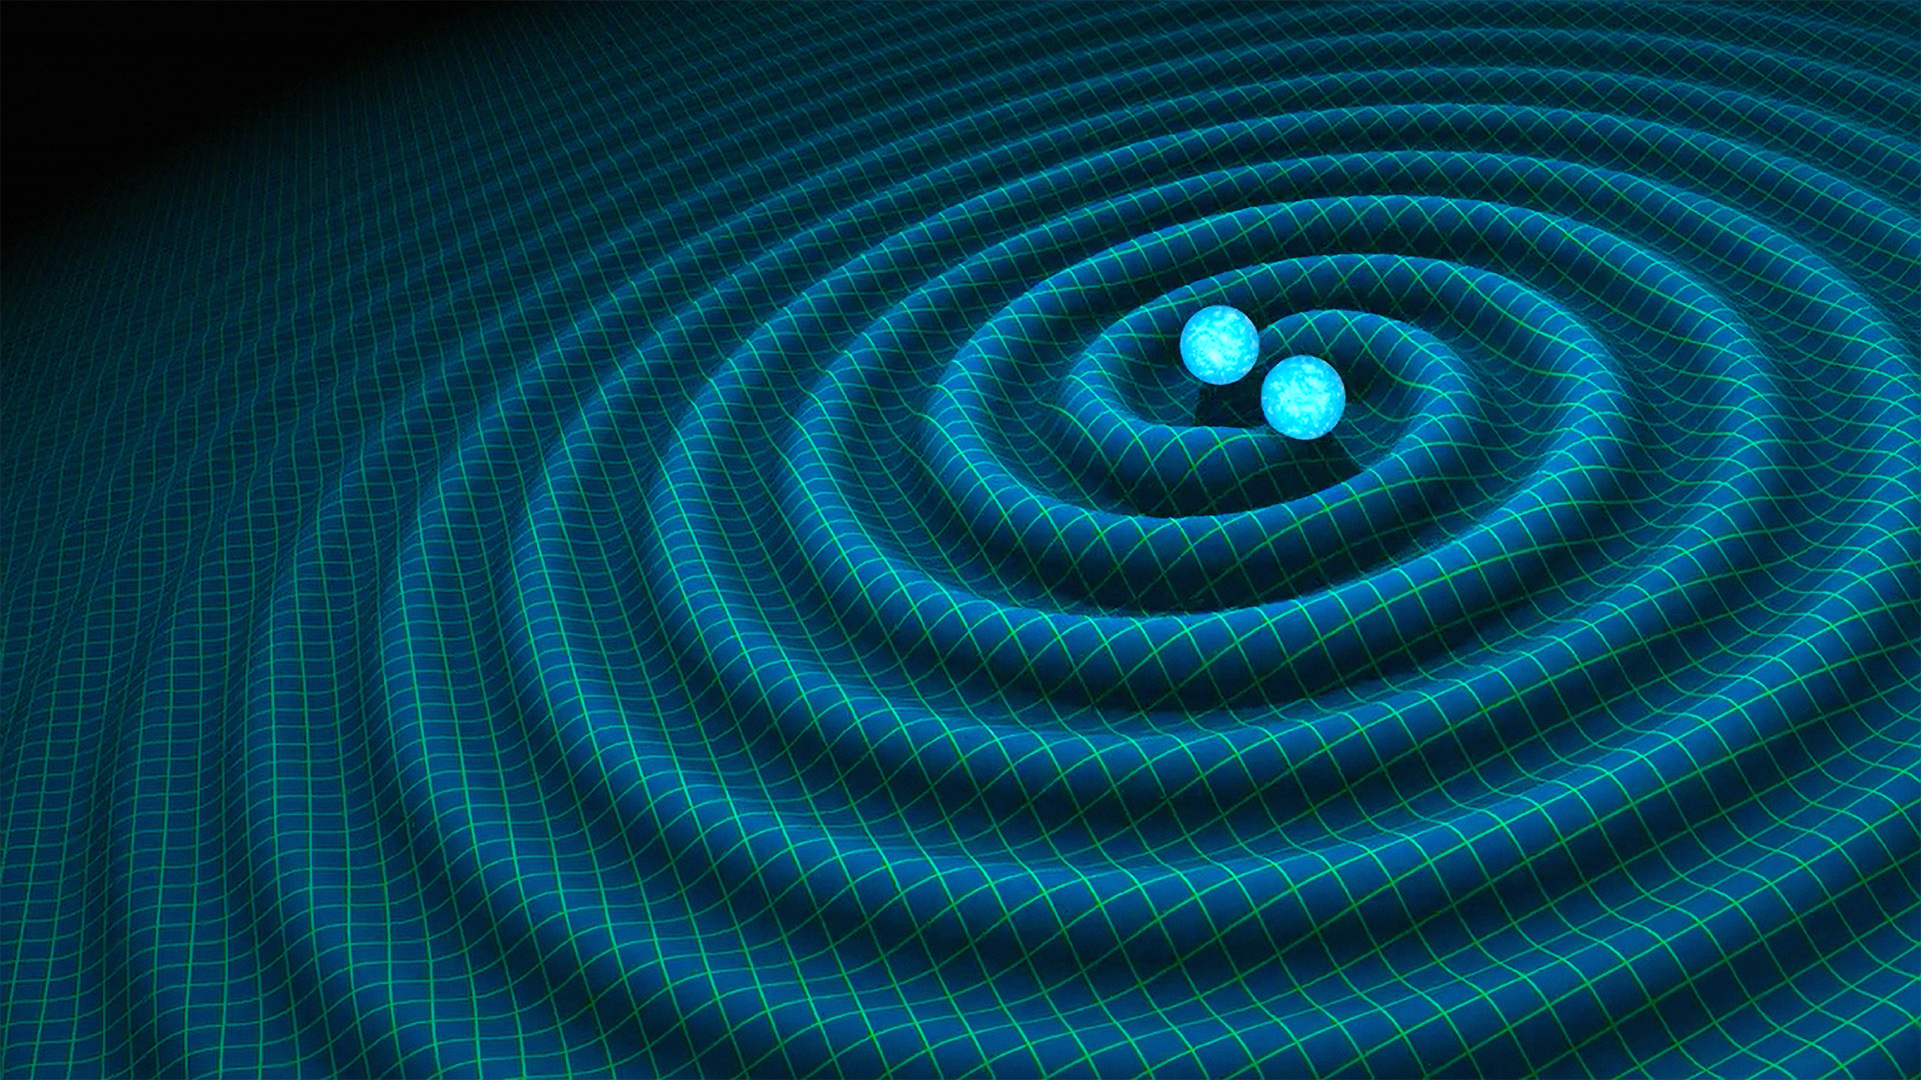 Artist's impression of gravitational waves generated by binary neutron stars. (Image: R. Hurt/Caltech-JPL)